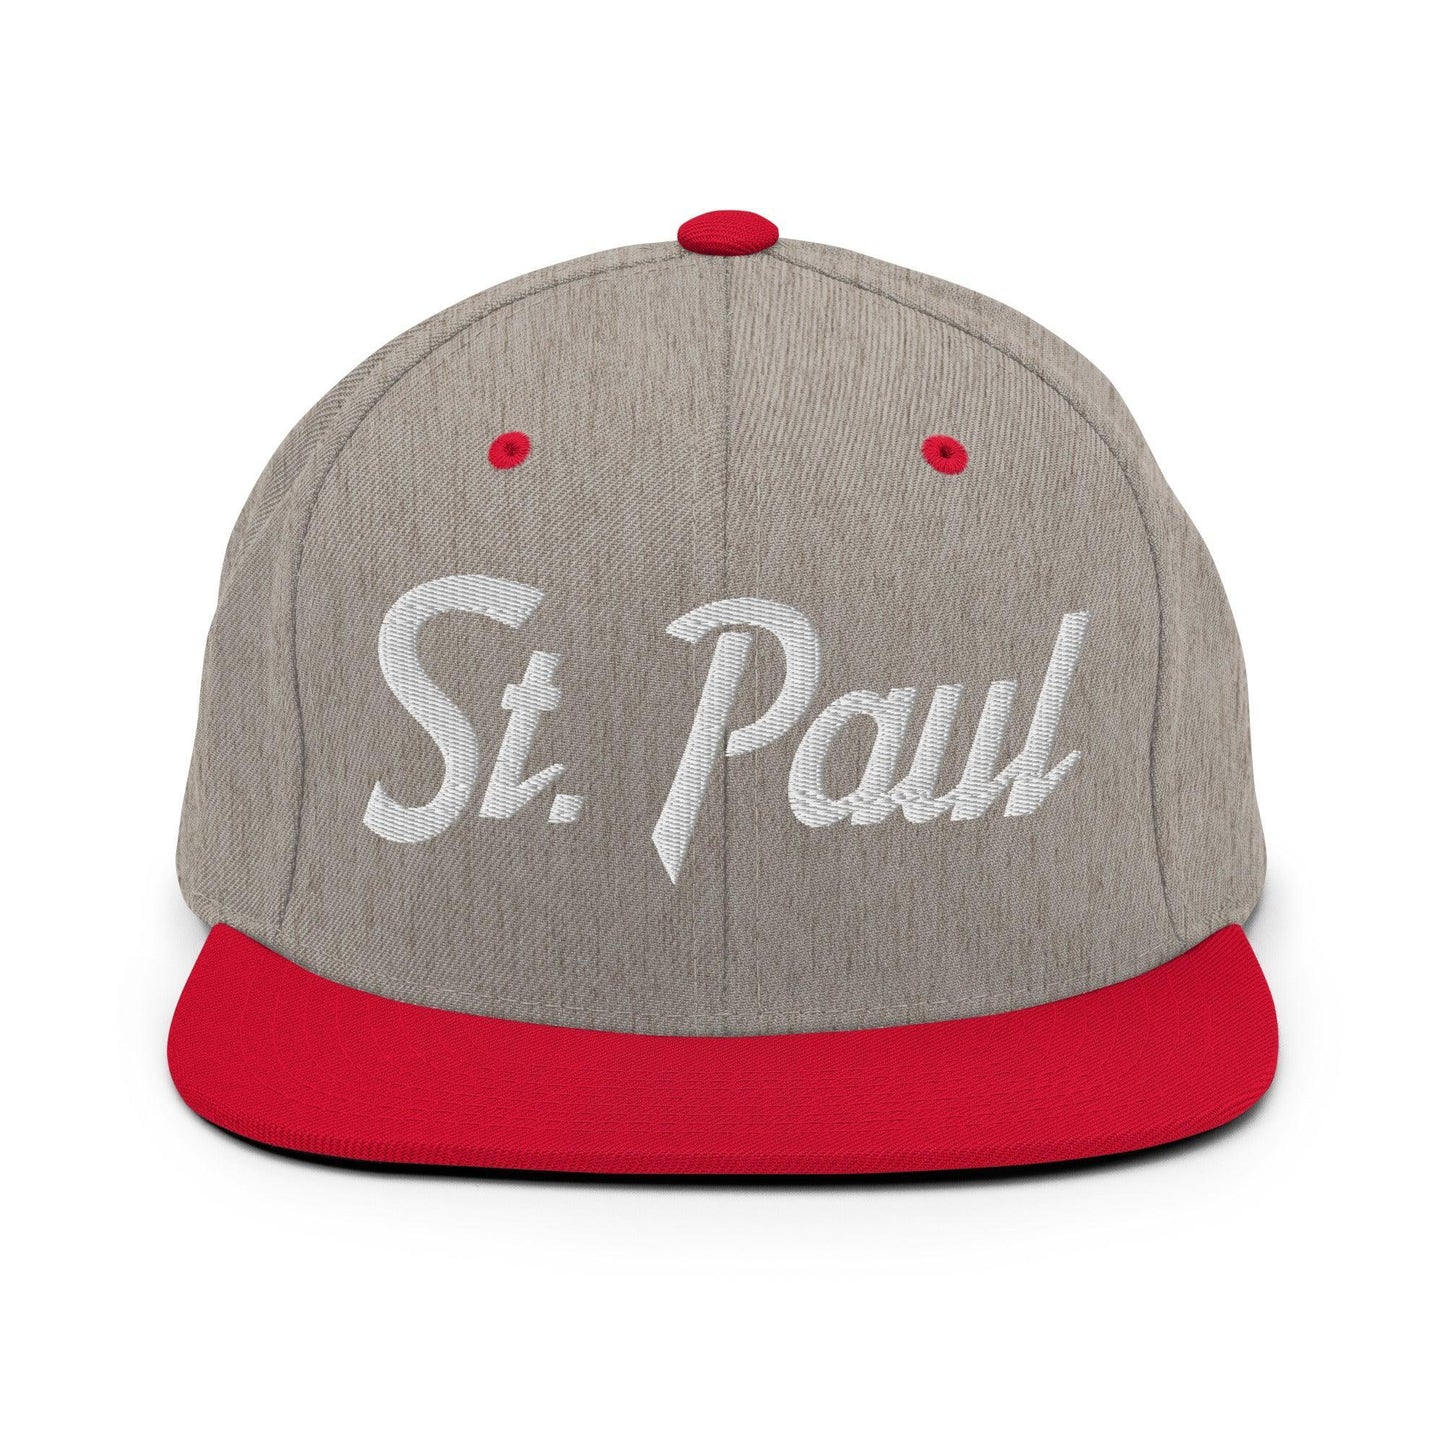 St. Paul Script Snapback Hat Heather Grey/ Red